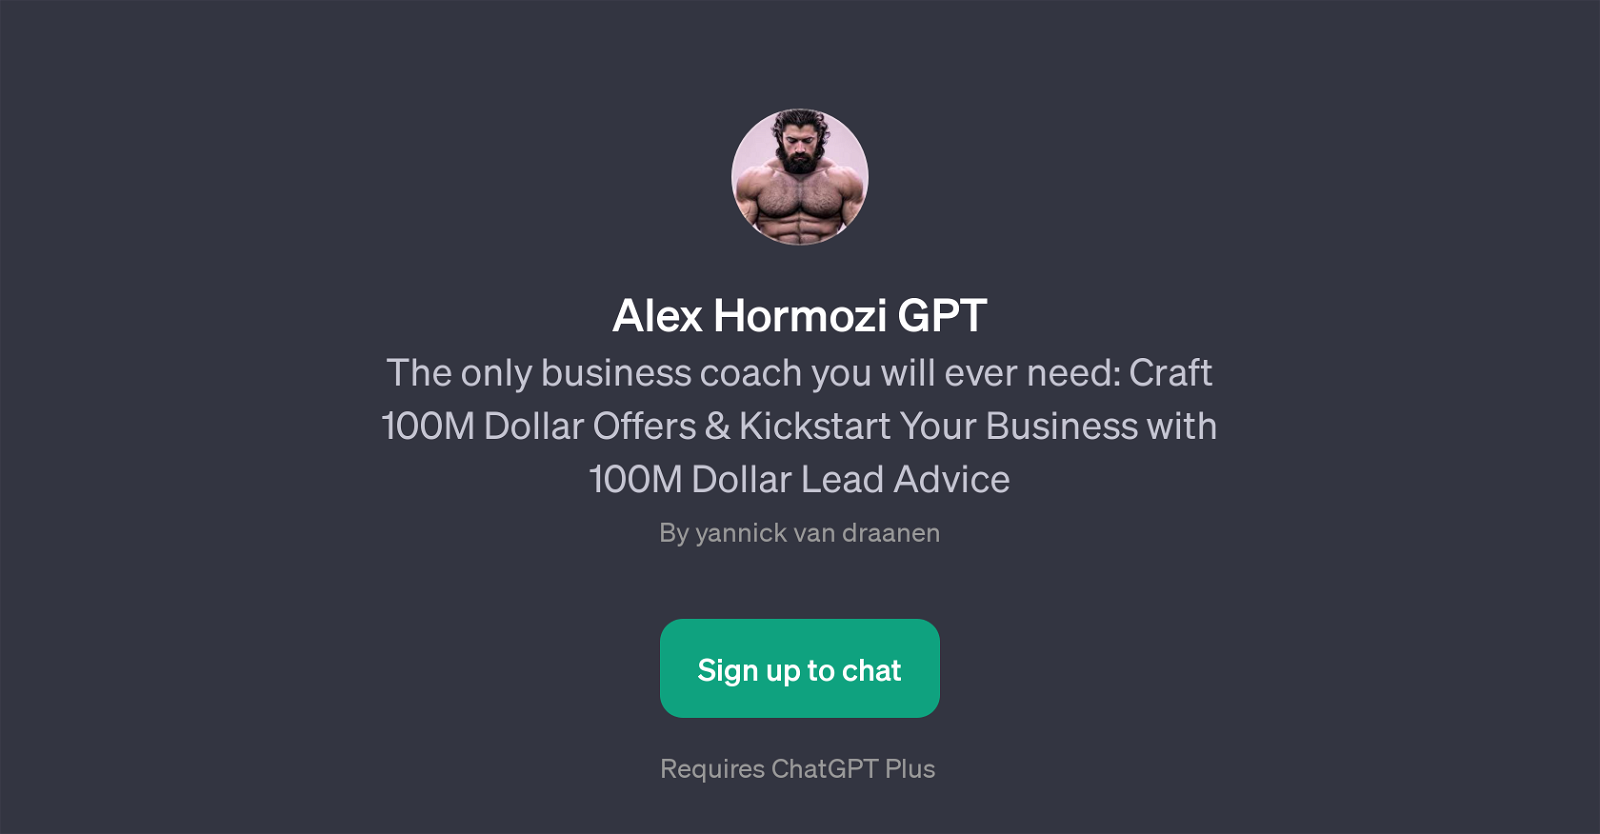 Alex Hormozi GPT website